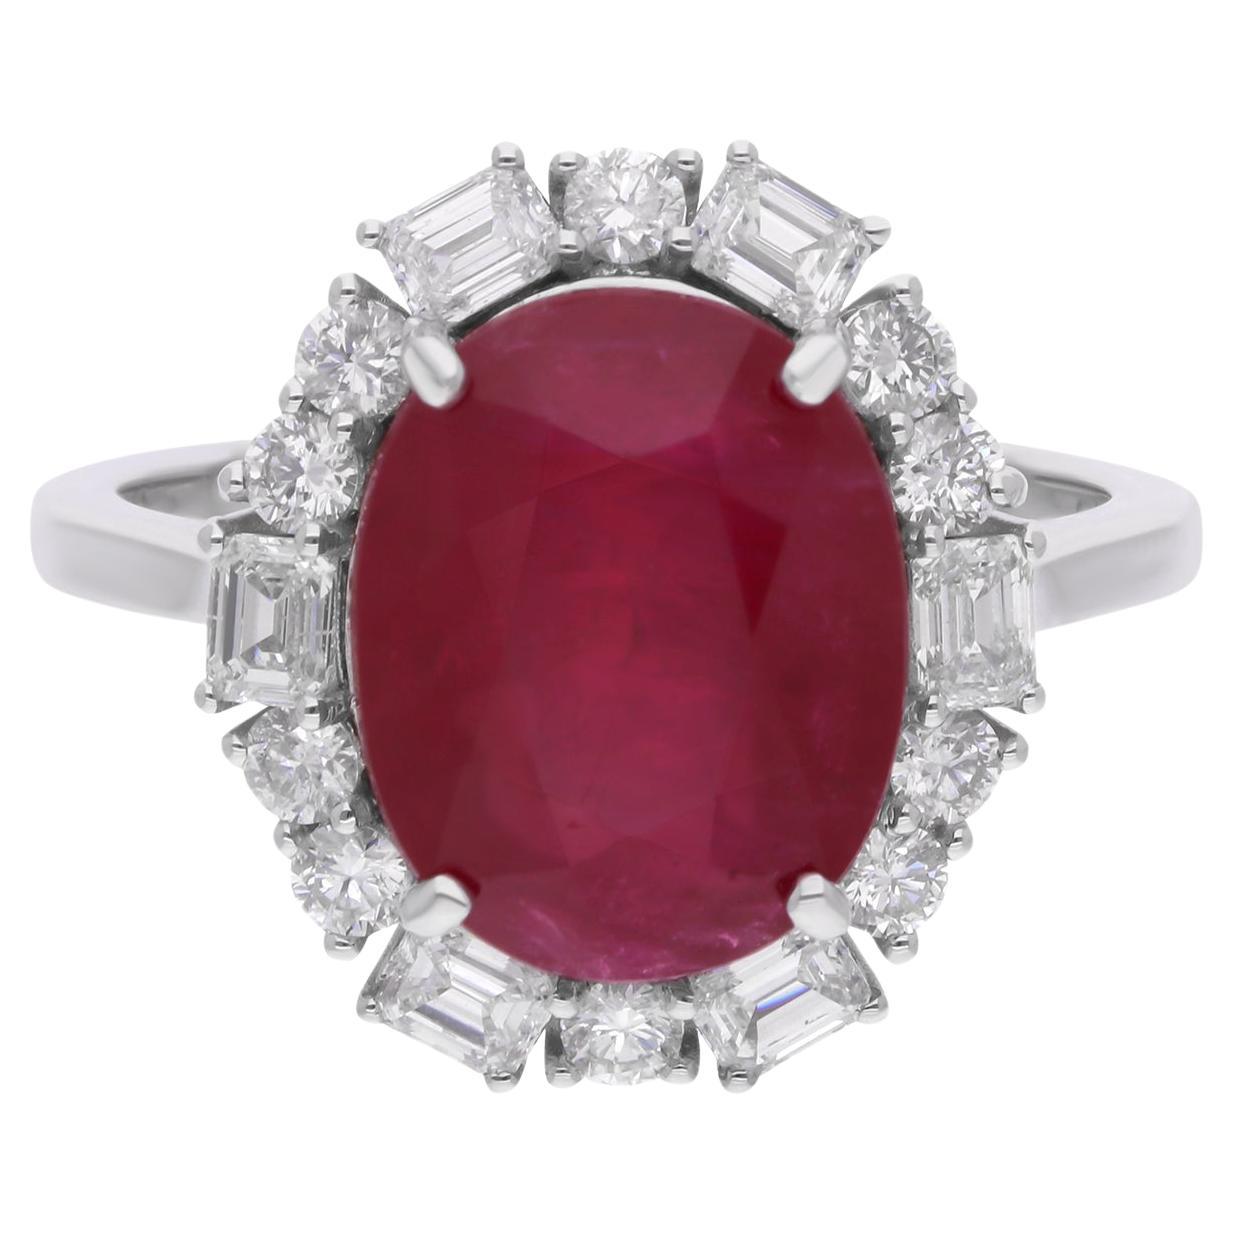 Oval Ruby Gemstone Cocktail Ring Diamond 18 Karat White Gold Handmade Jewelry